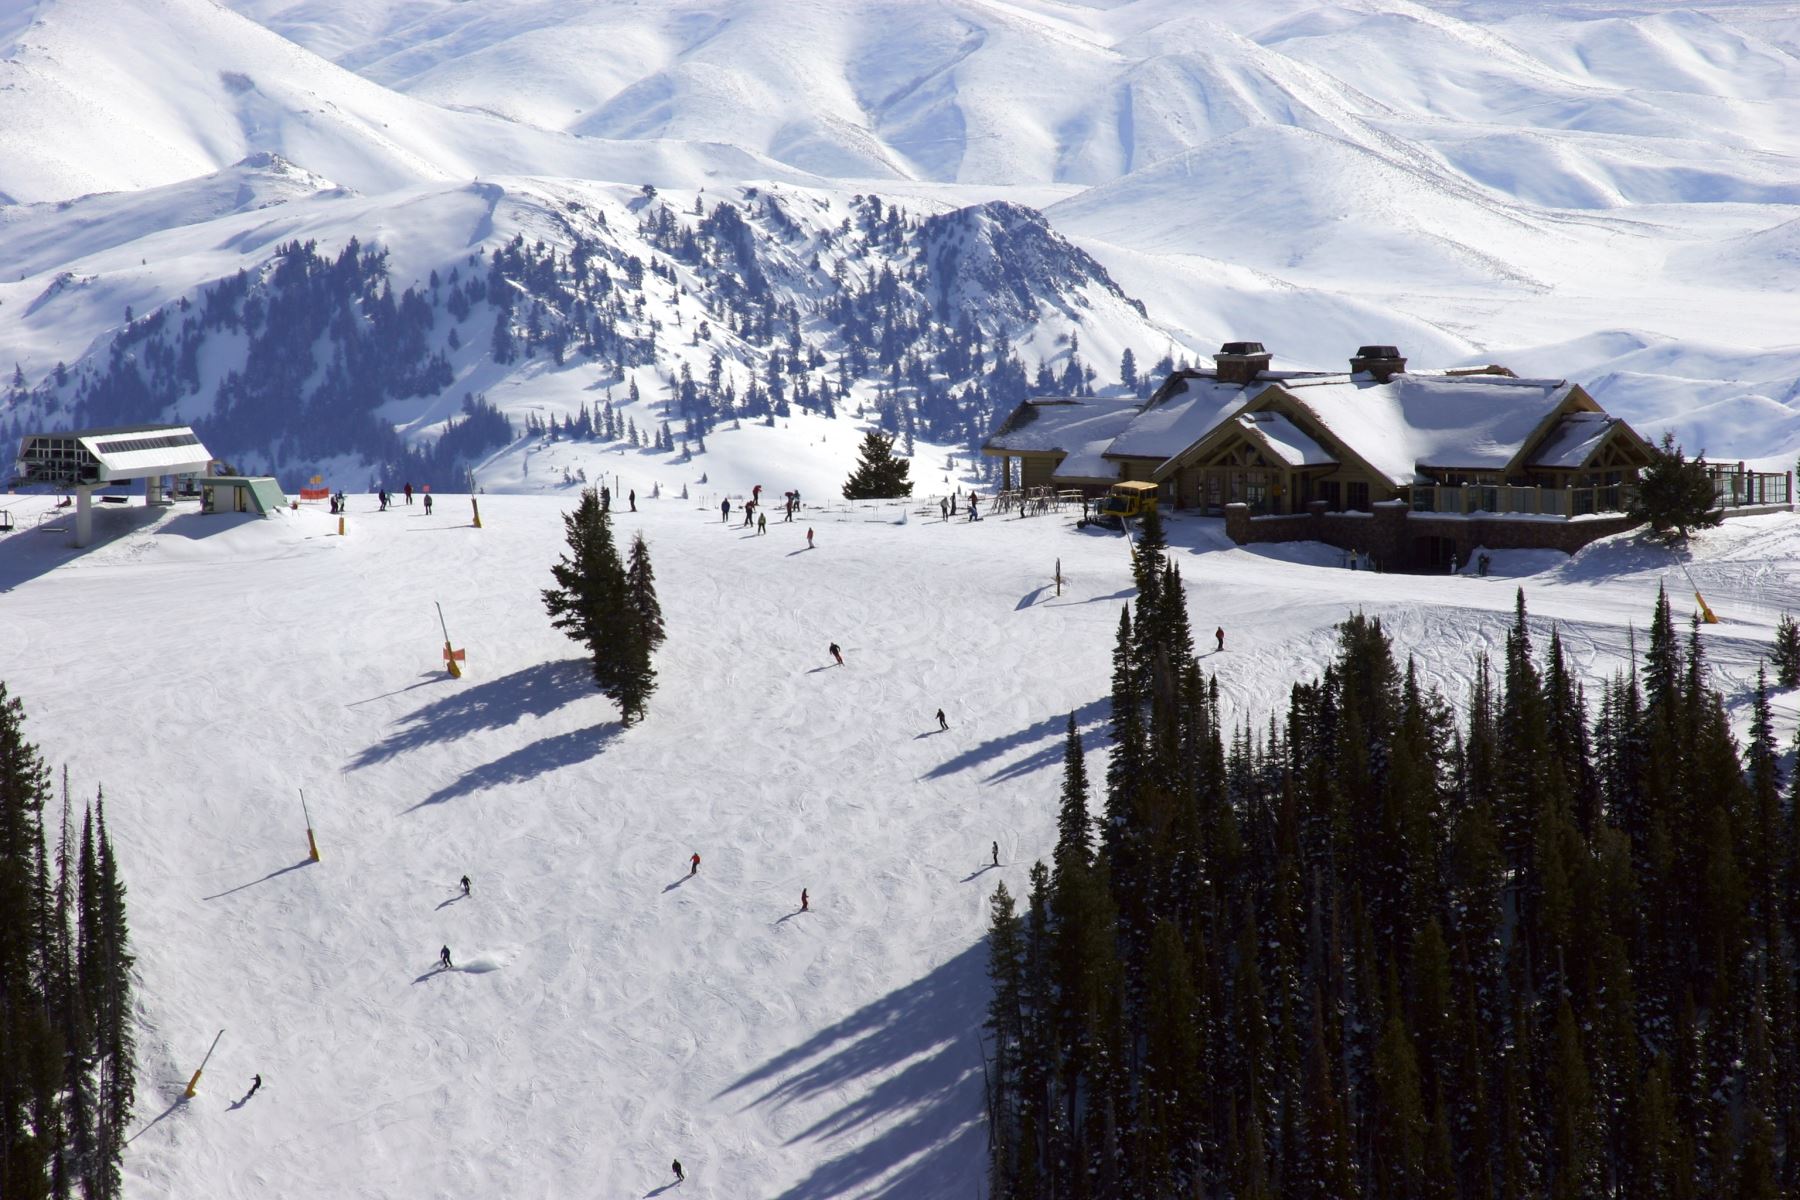 sun valley resort skiiers in winter